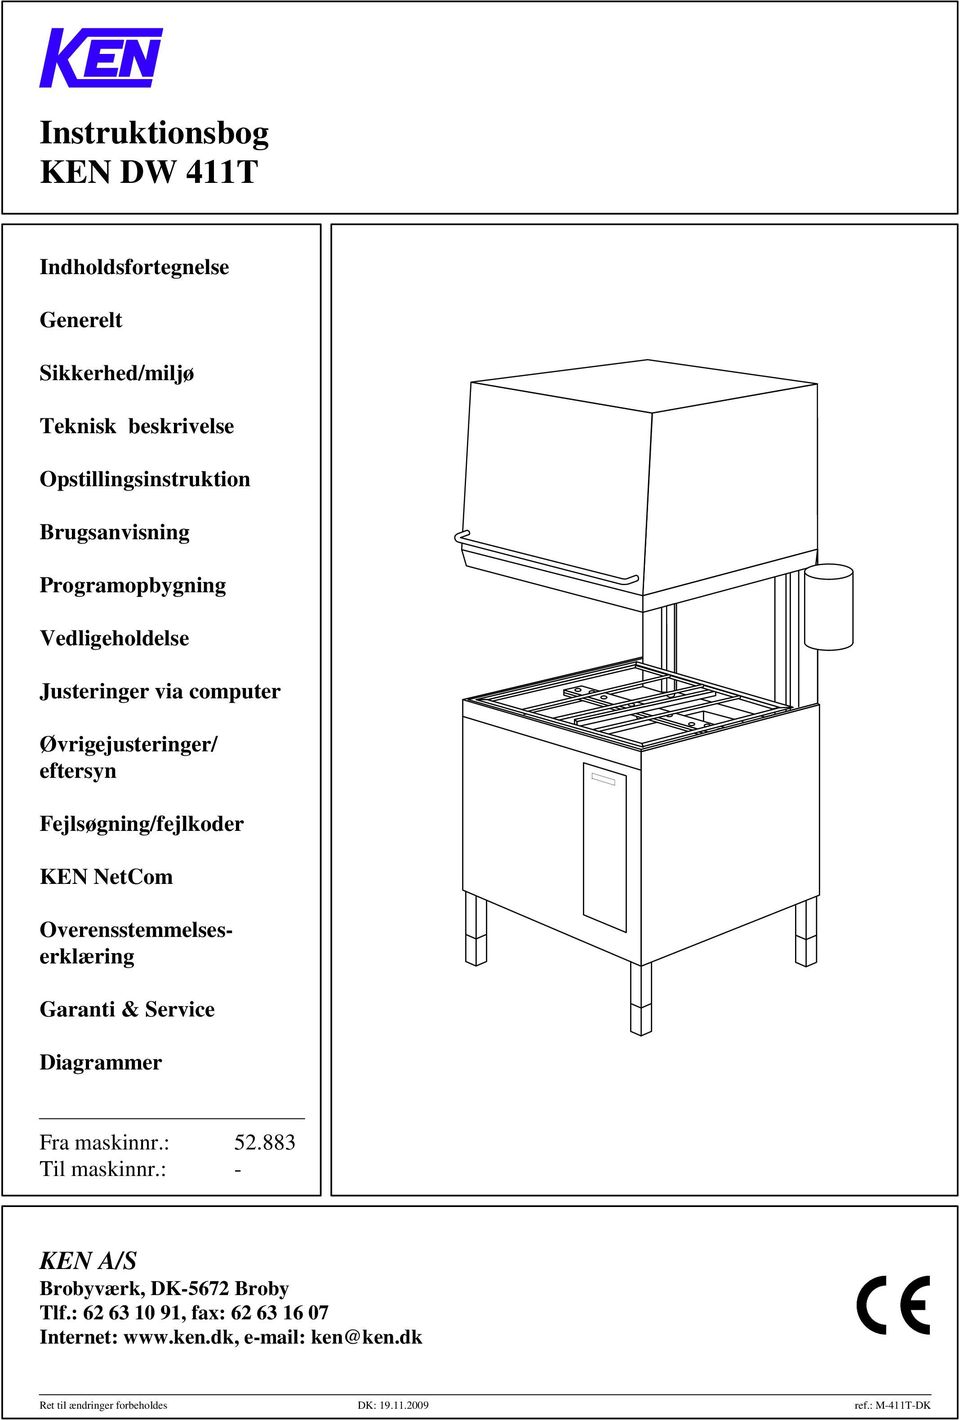 Instruktionsbog KEN DW 411T - PDF Free Download